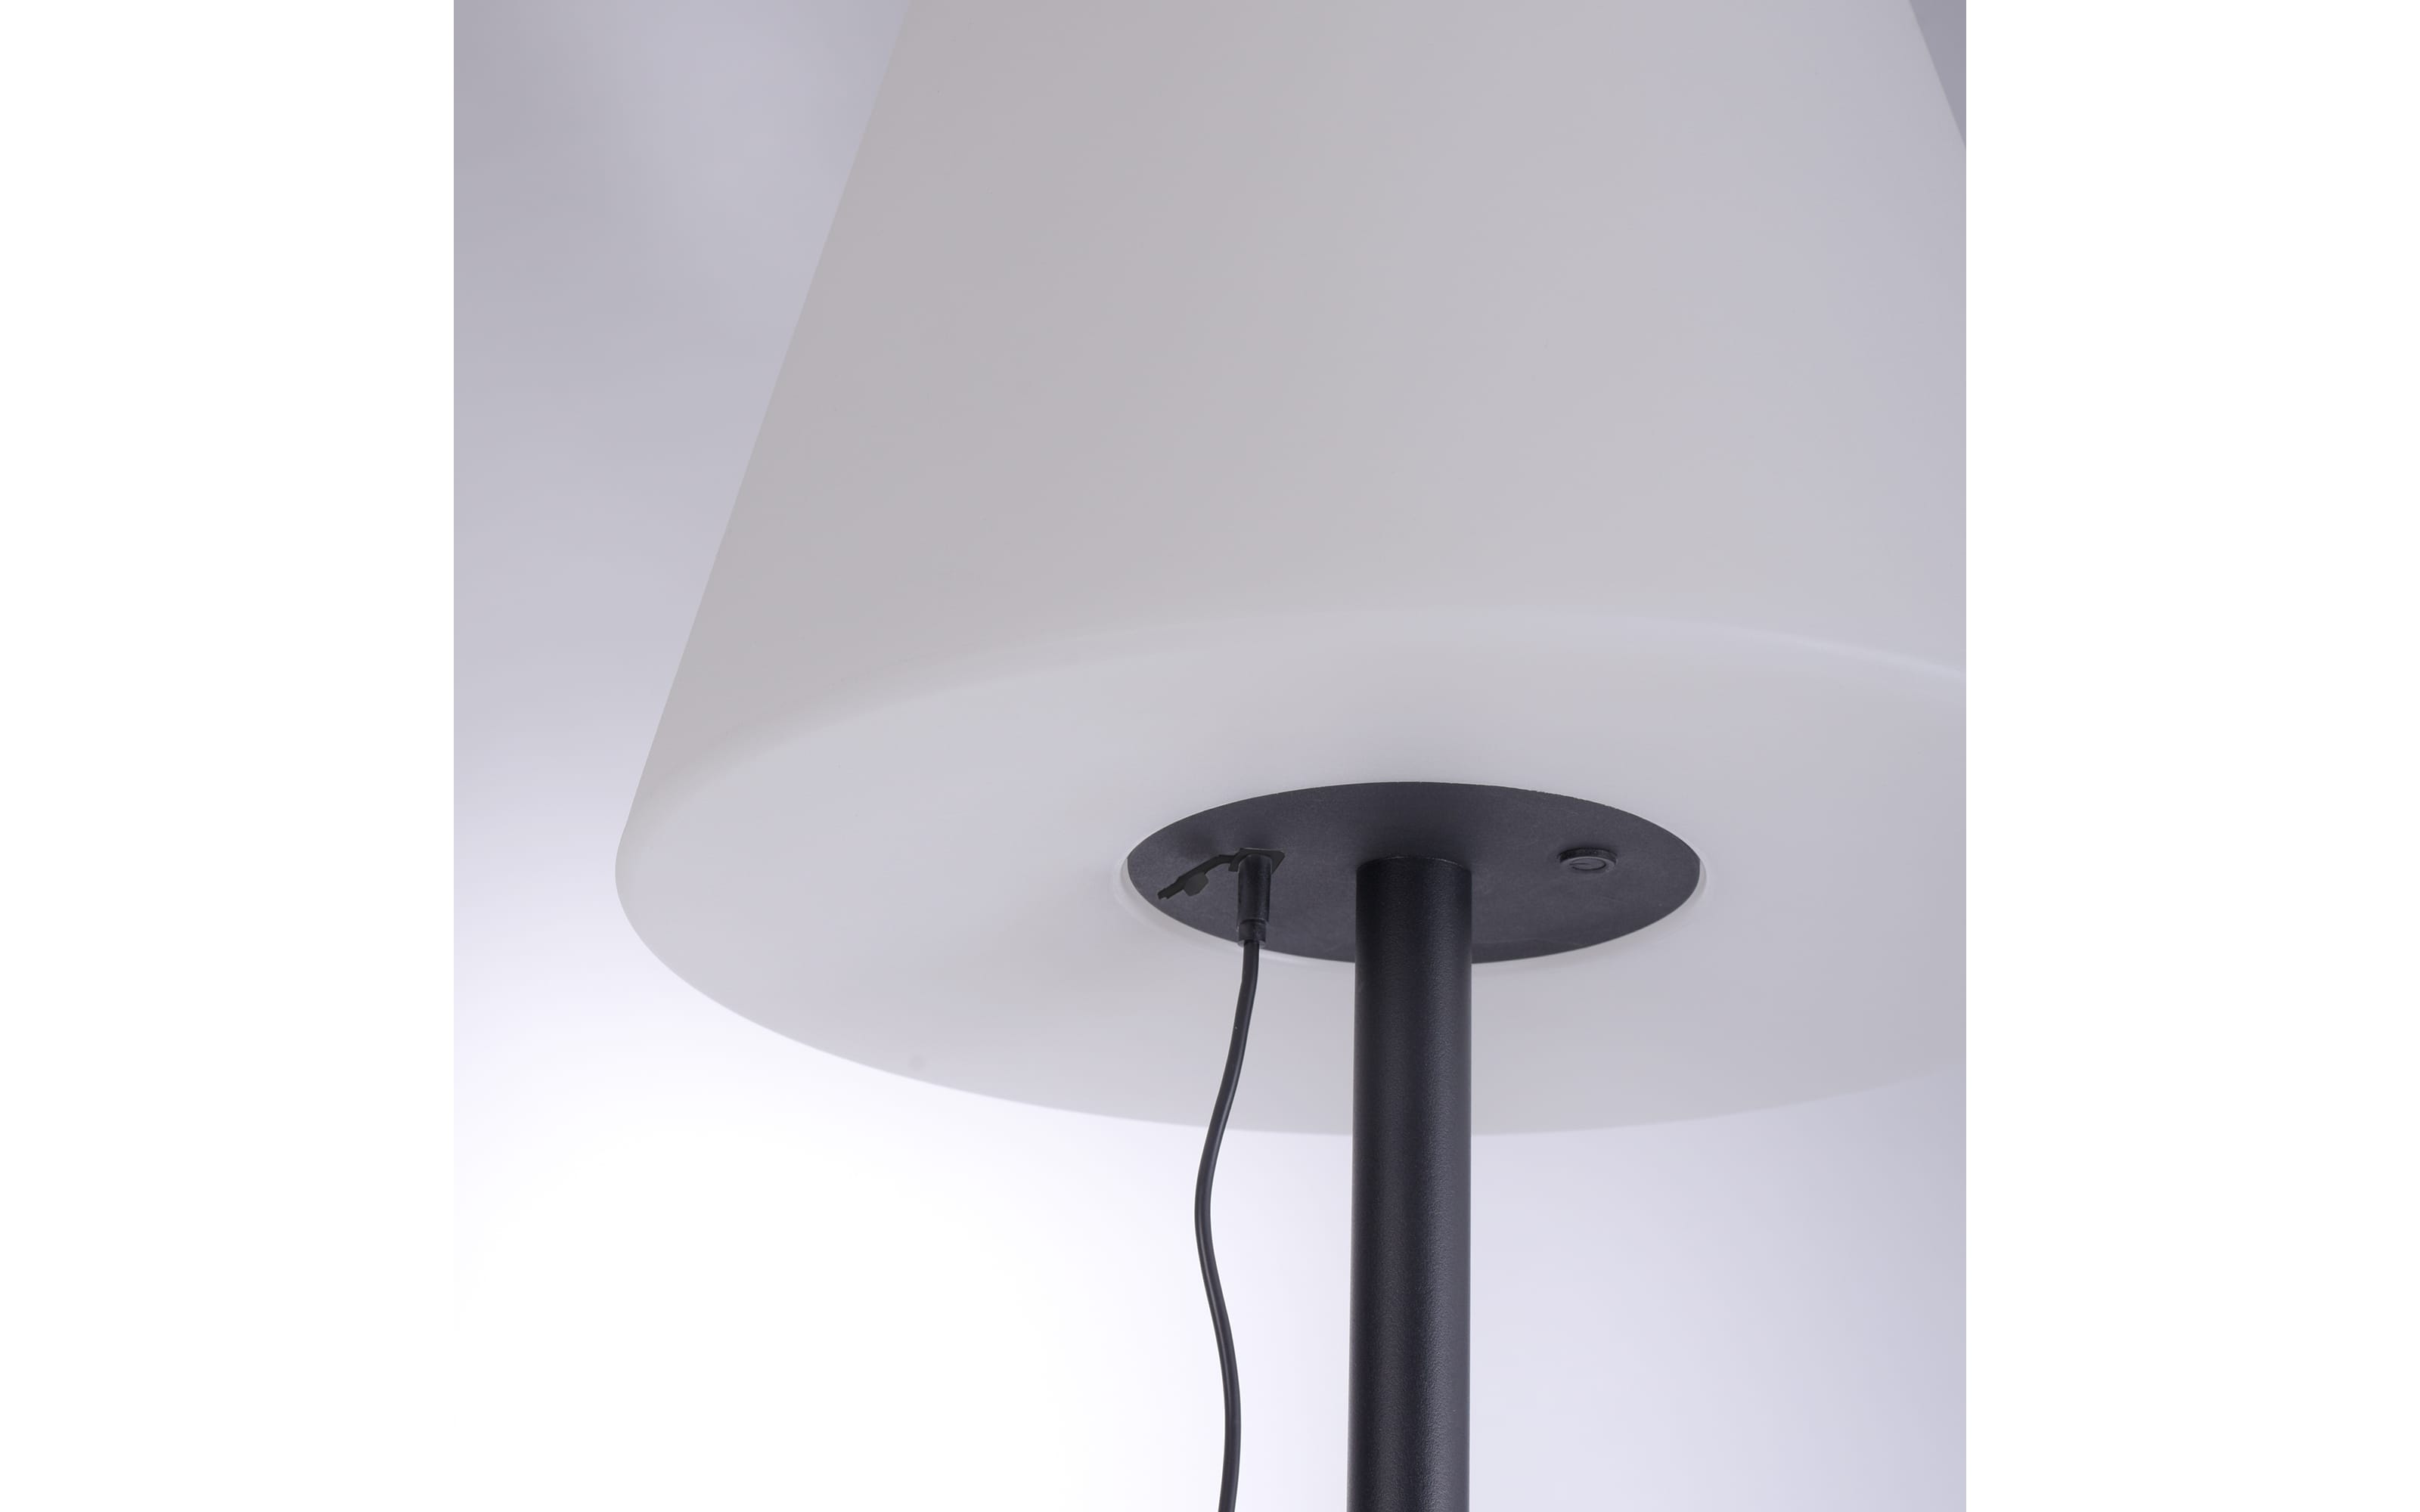 LED-Akku-Standleuchte Holly, schwarz/weiß, 157 cm